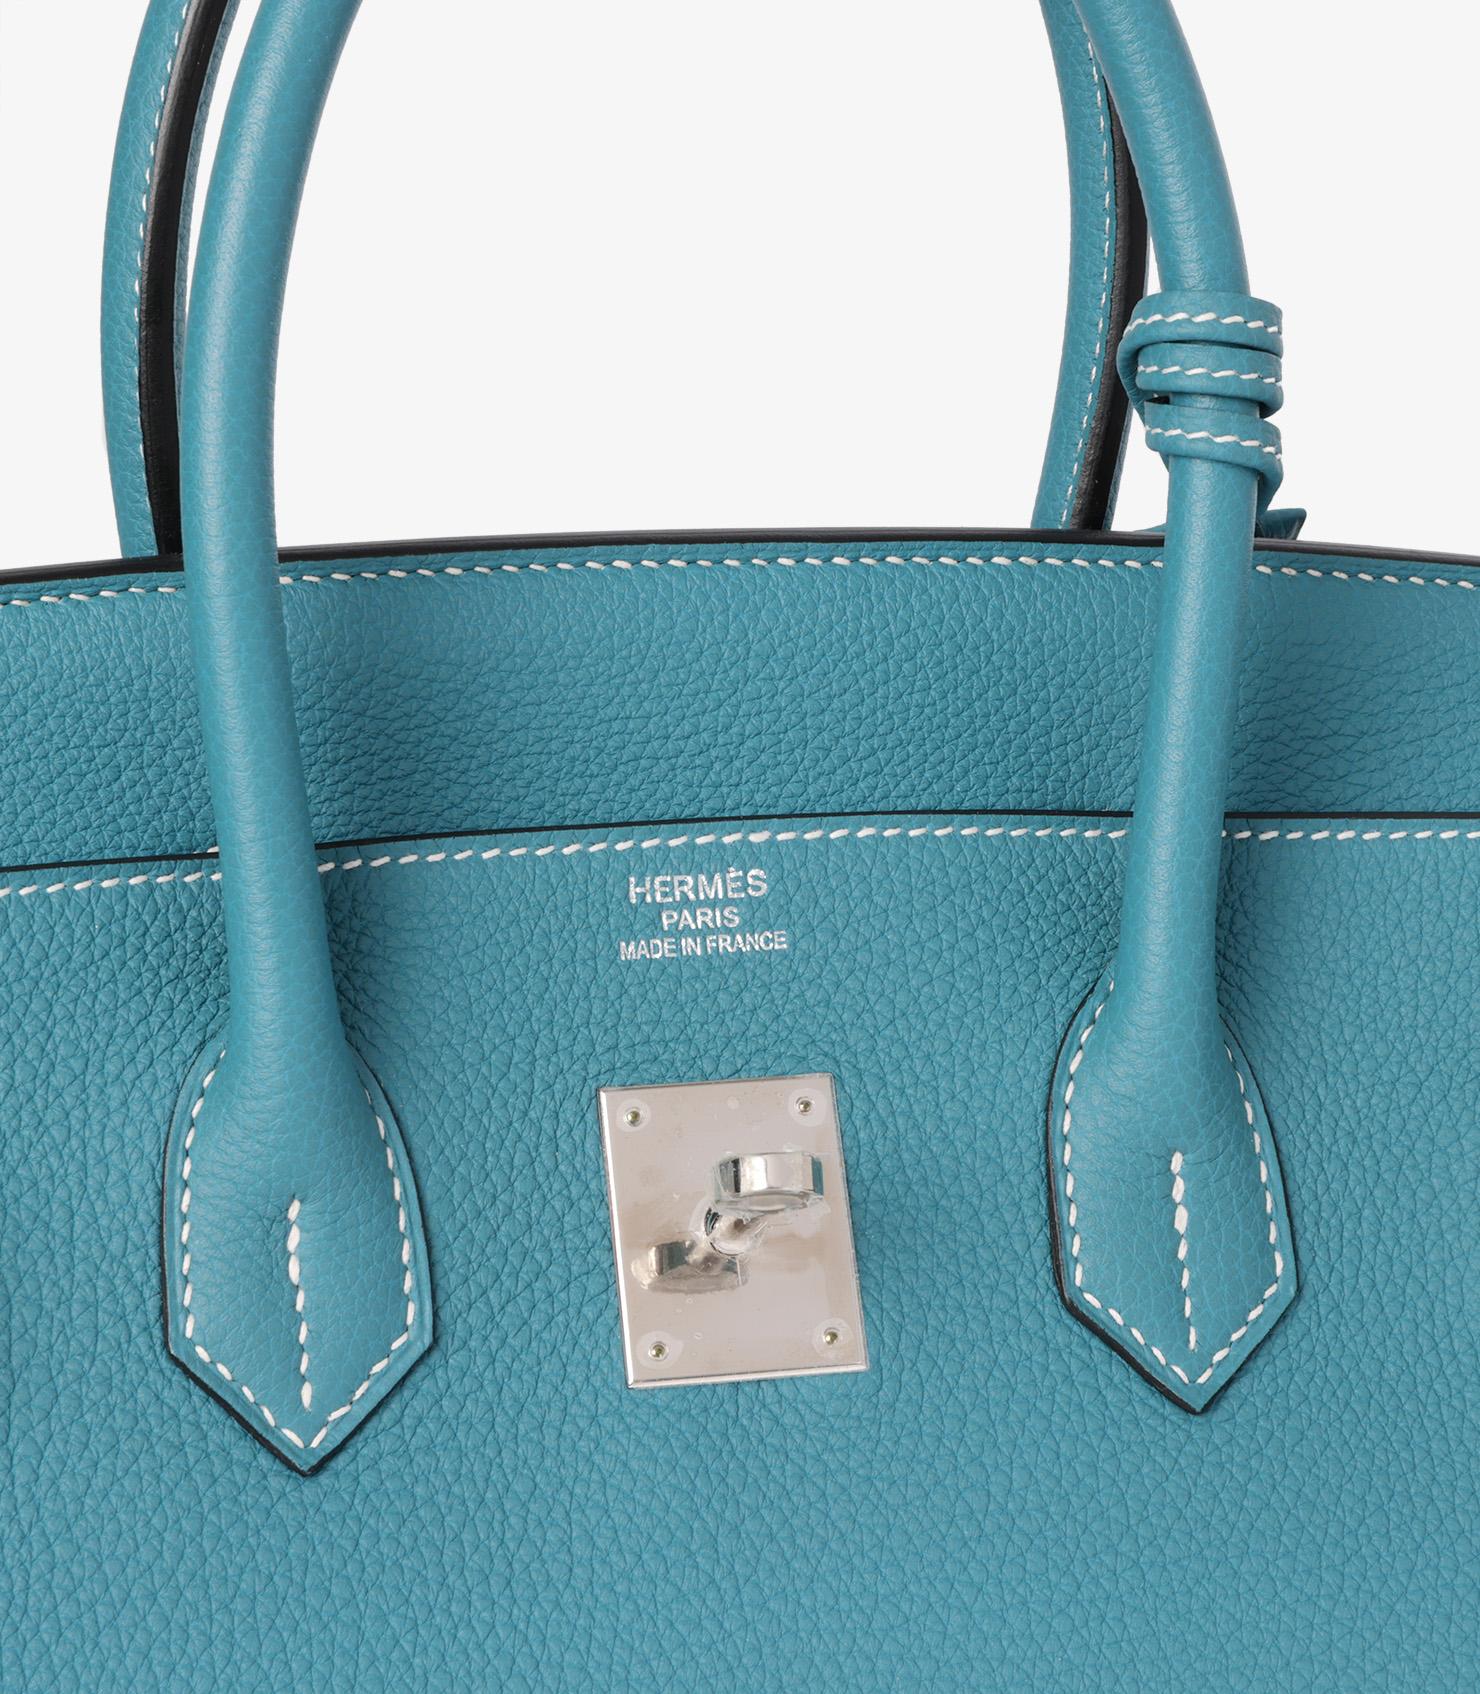 Hermès Blue Jean Togo Leather Birkin 35cm Retourne For Sale 4